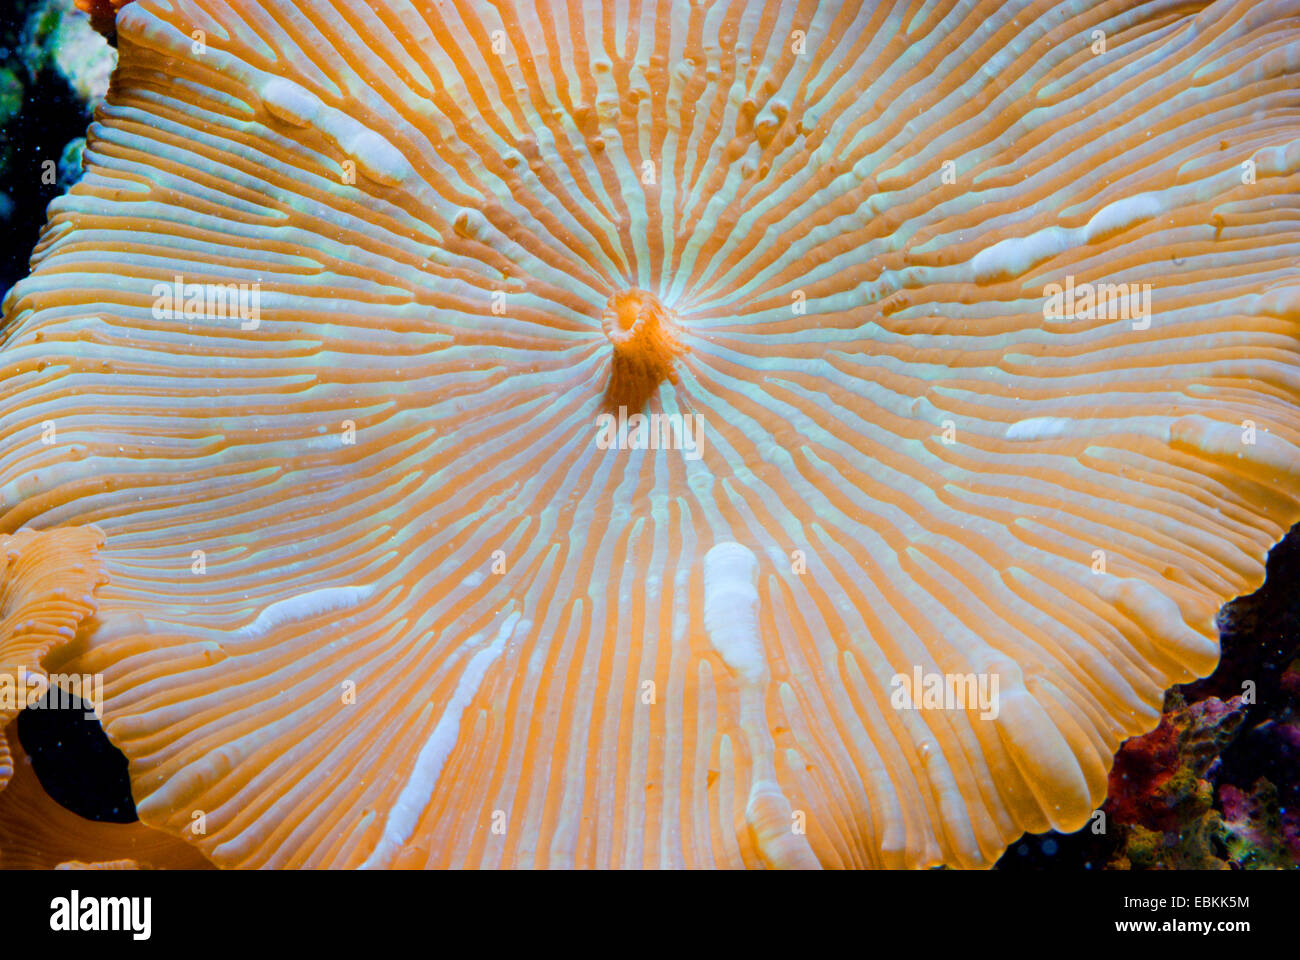 Mushroom Coral (Discosoma spec.), close-up view Stock Photo